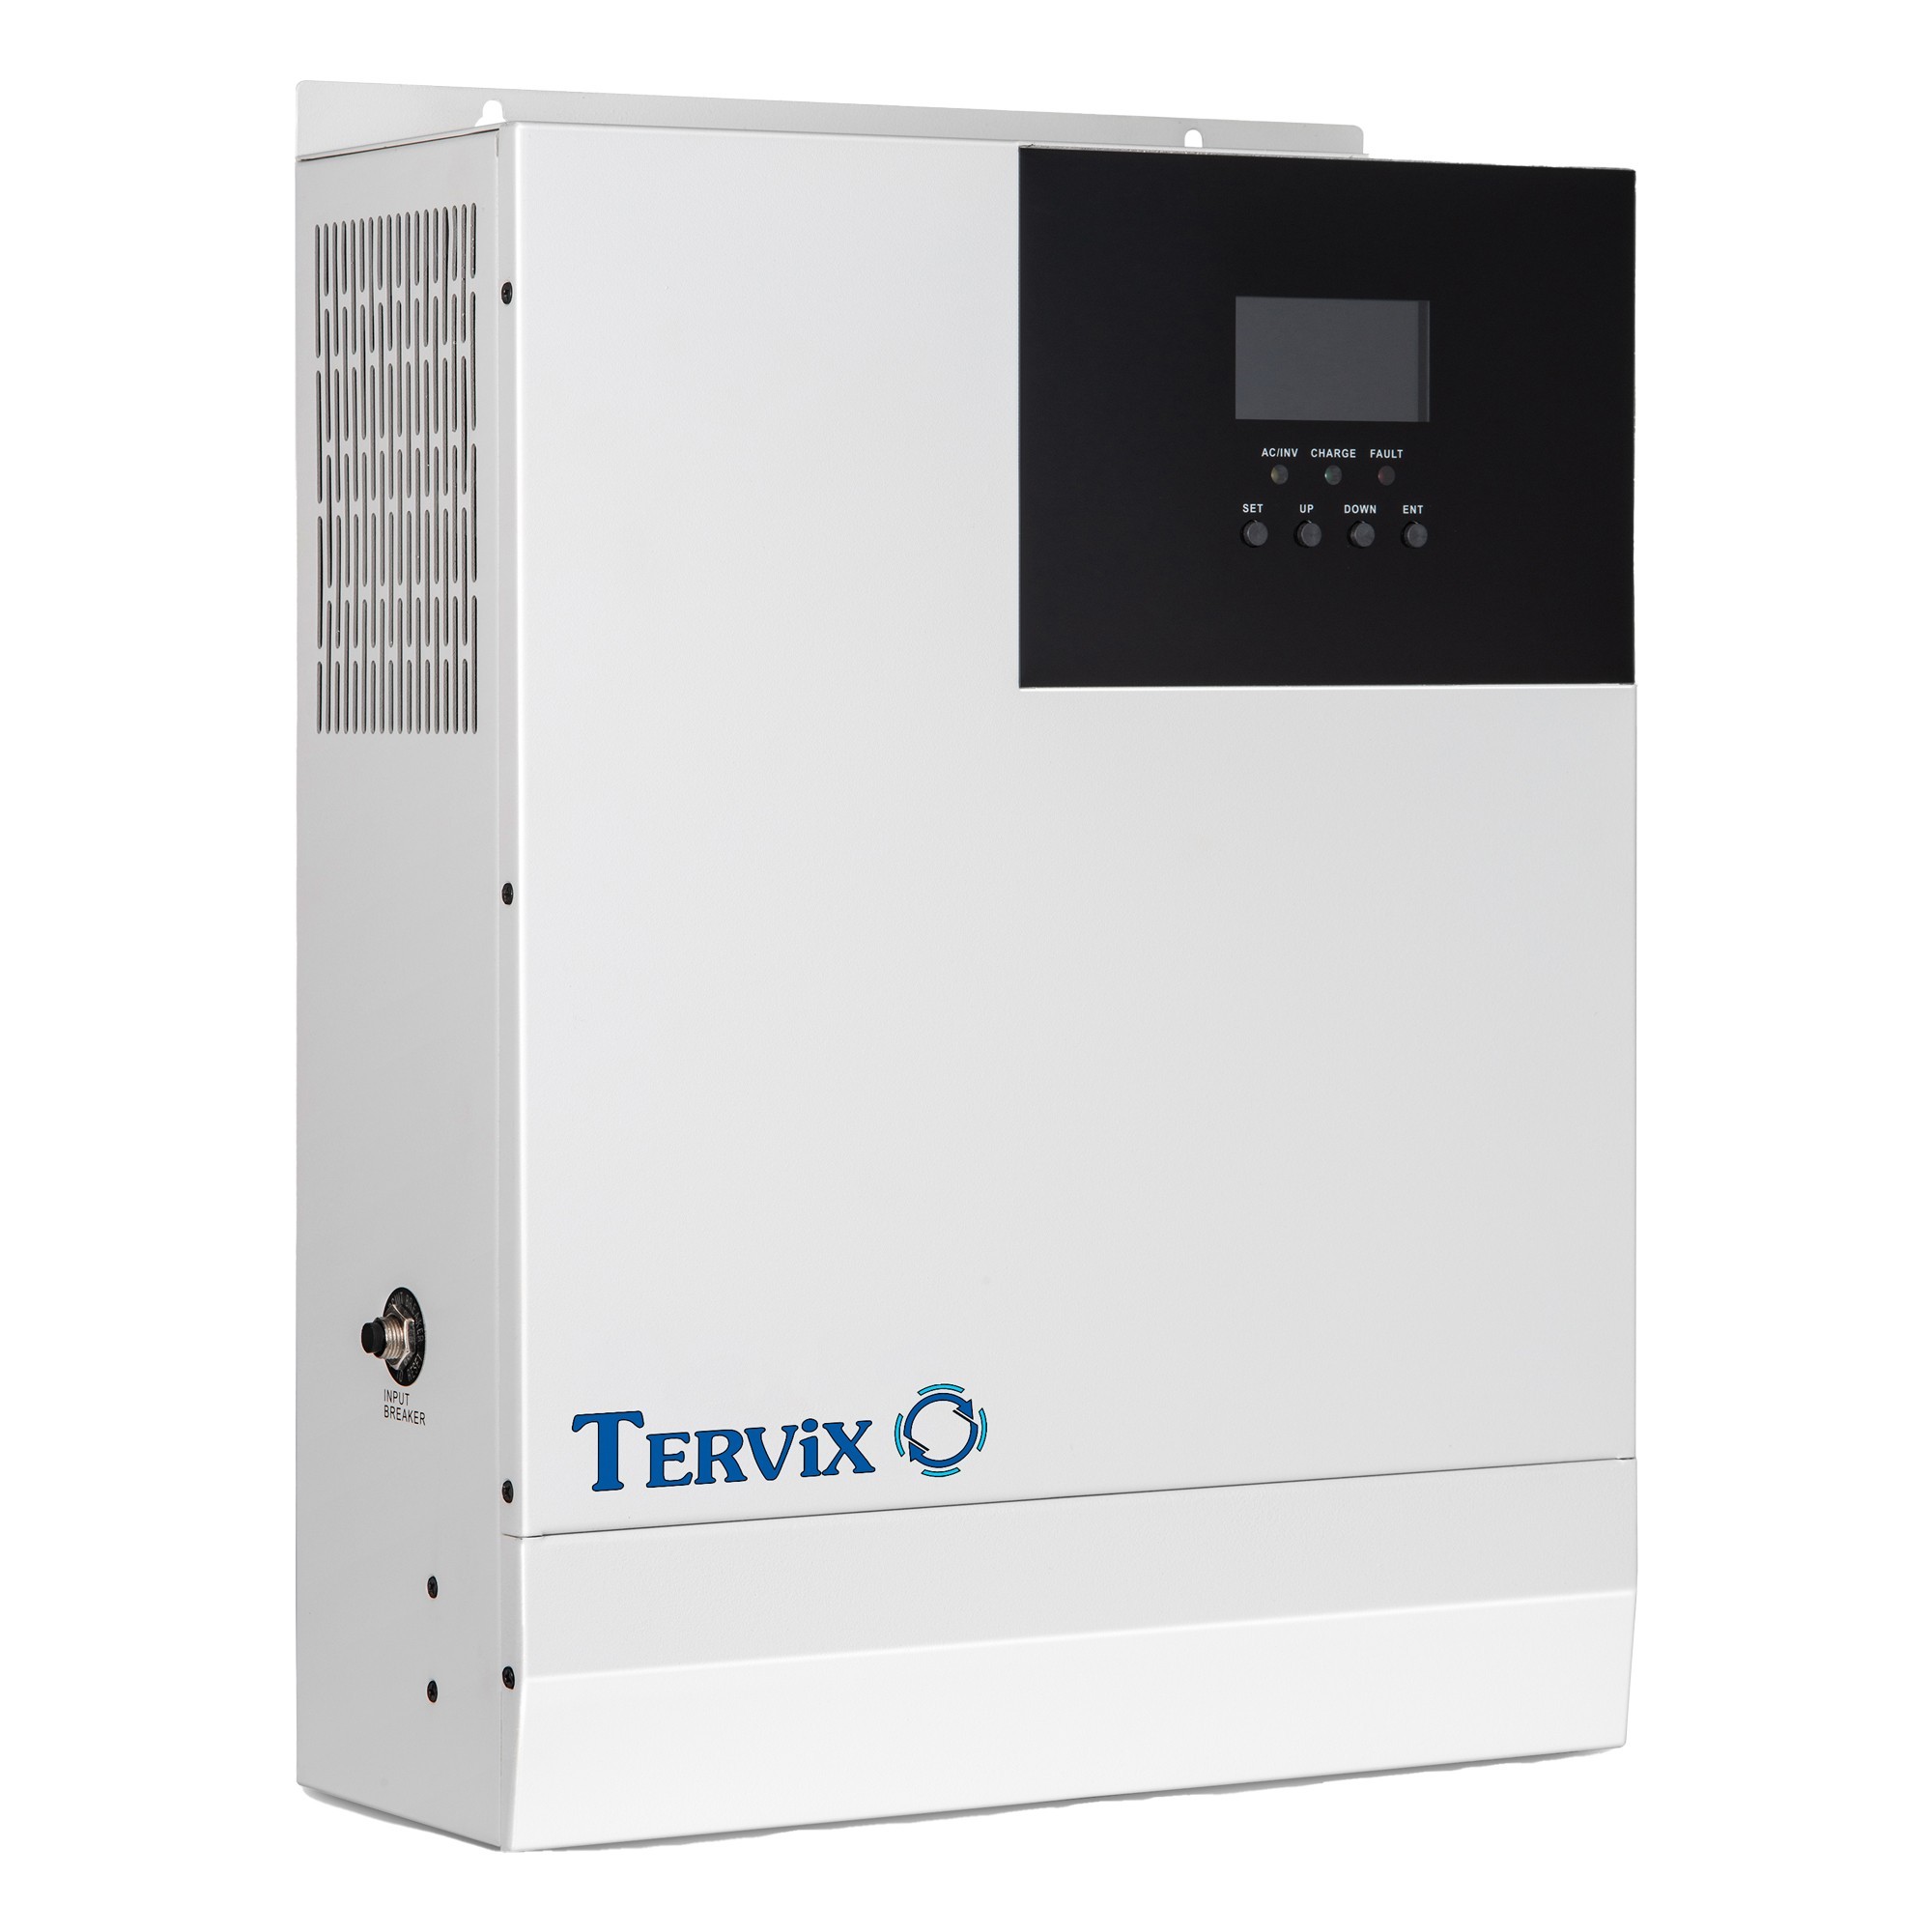 Система автономного питания Tervix BANKA 9,6 кВтч - инвертор 5кВт + аккумулятор 48В 100 Ач (2 шт) 693220 цена 234600.00 грн - фотография 2